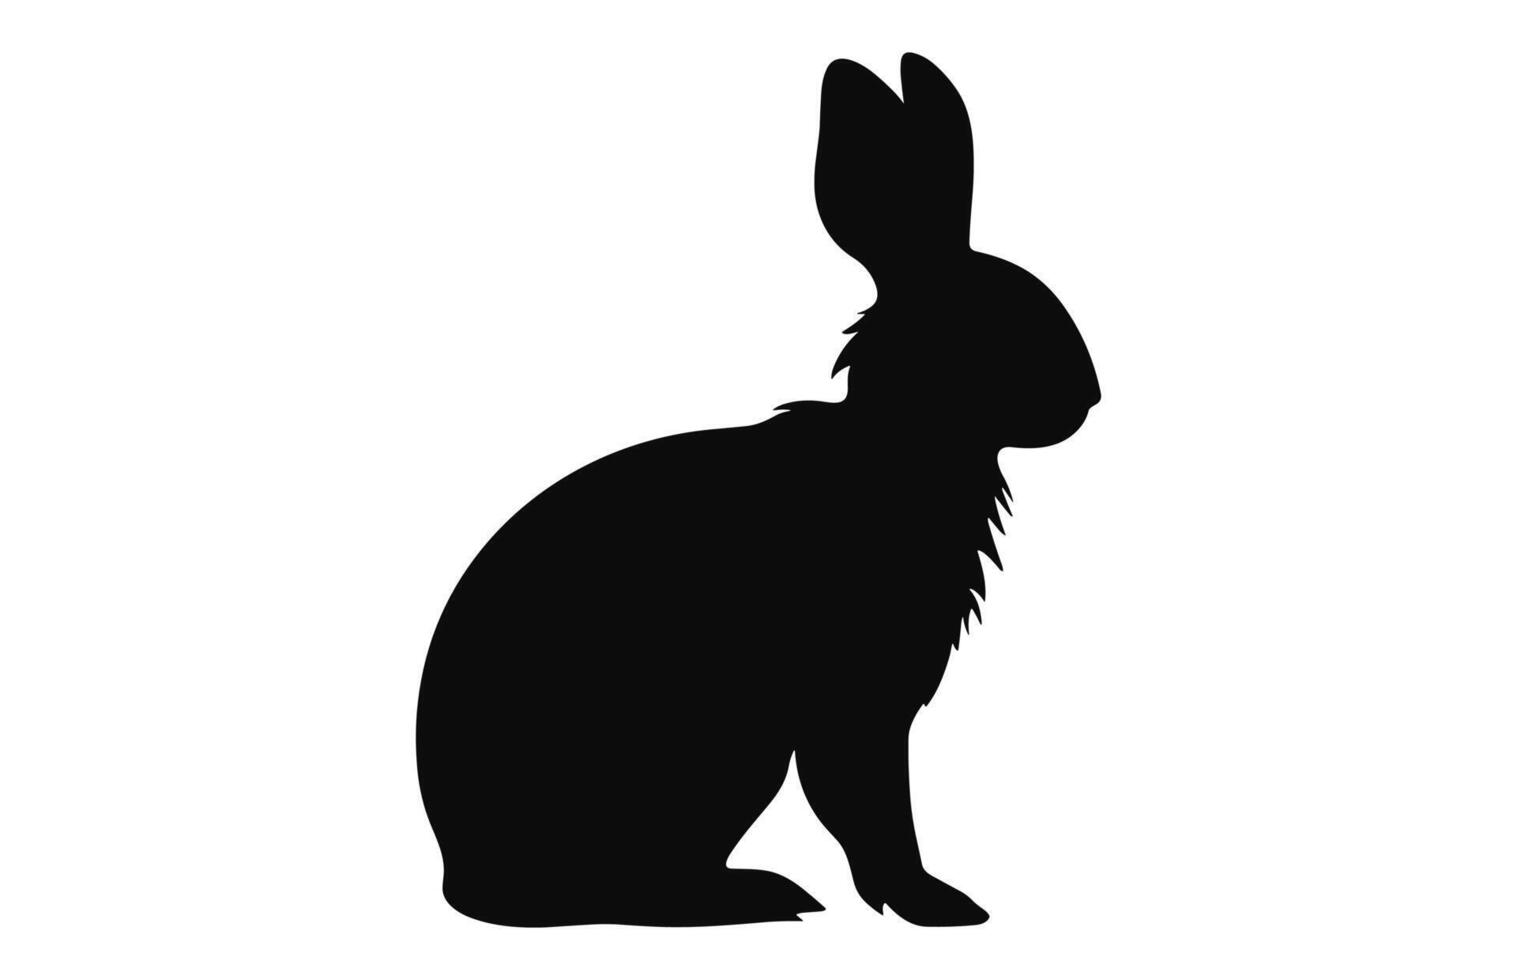 Conejo vector negro silueta aislado en un blanco antecedentes